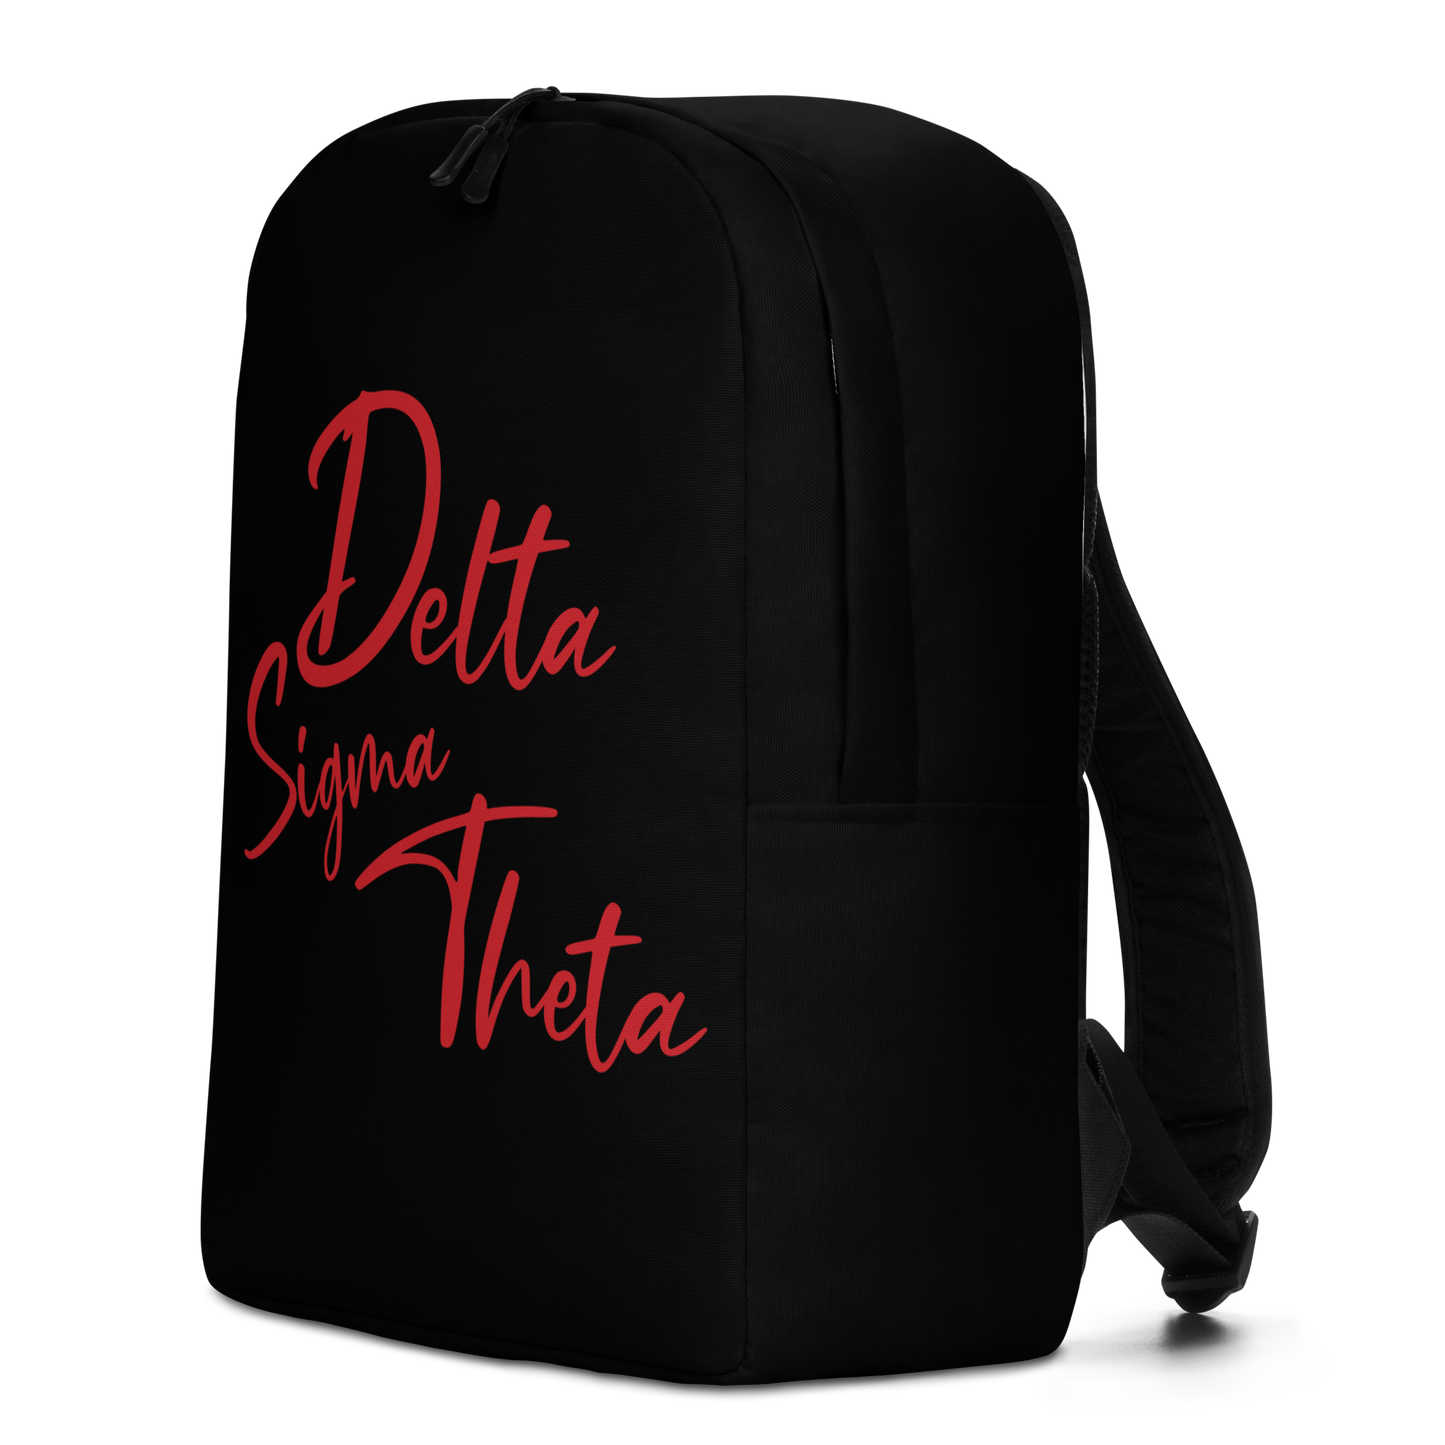 Delta Script Minimalist Backpack